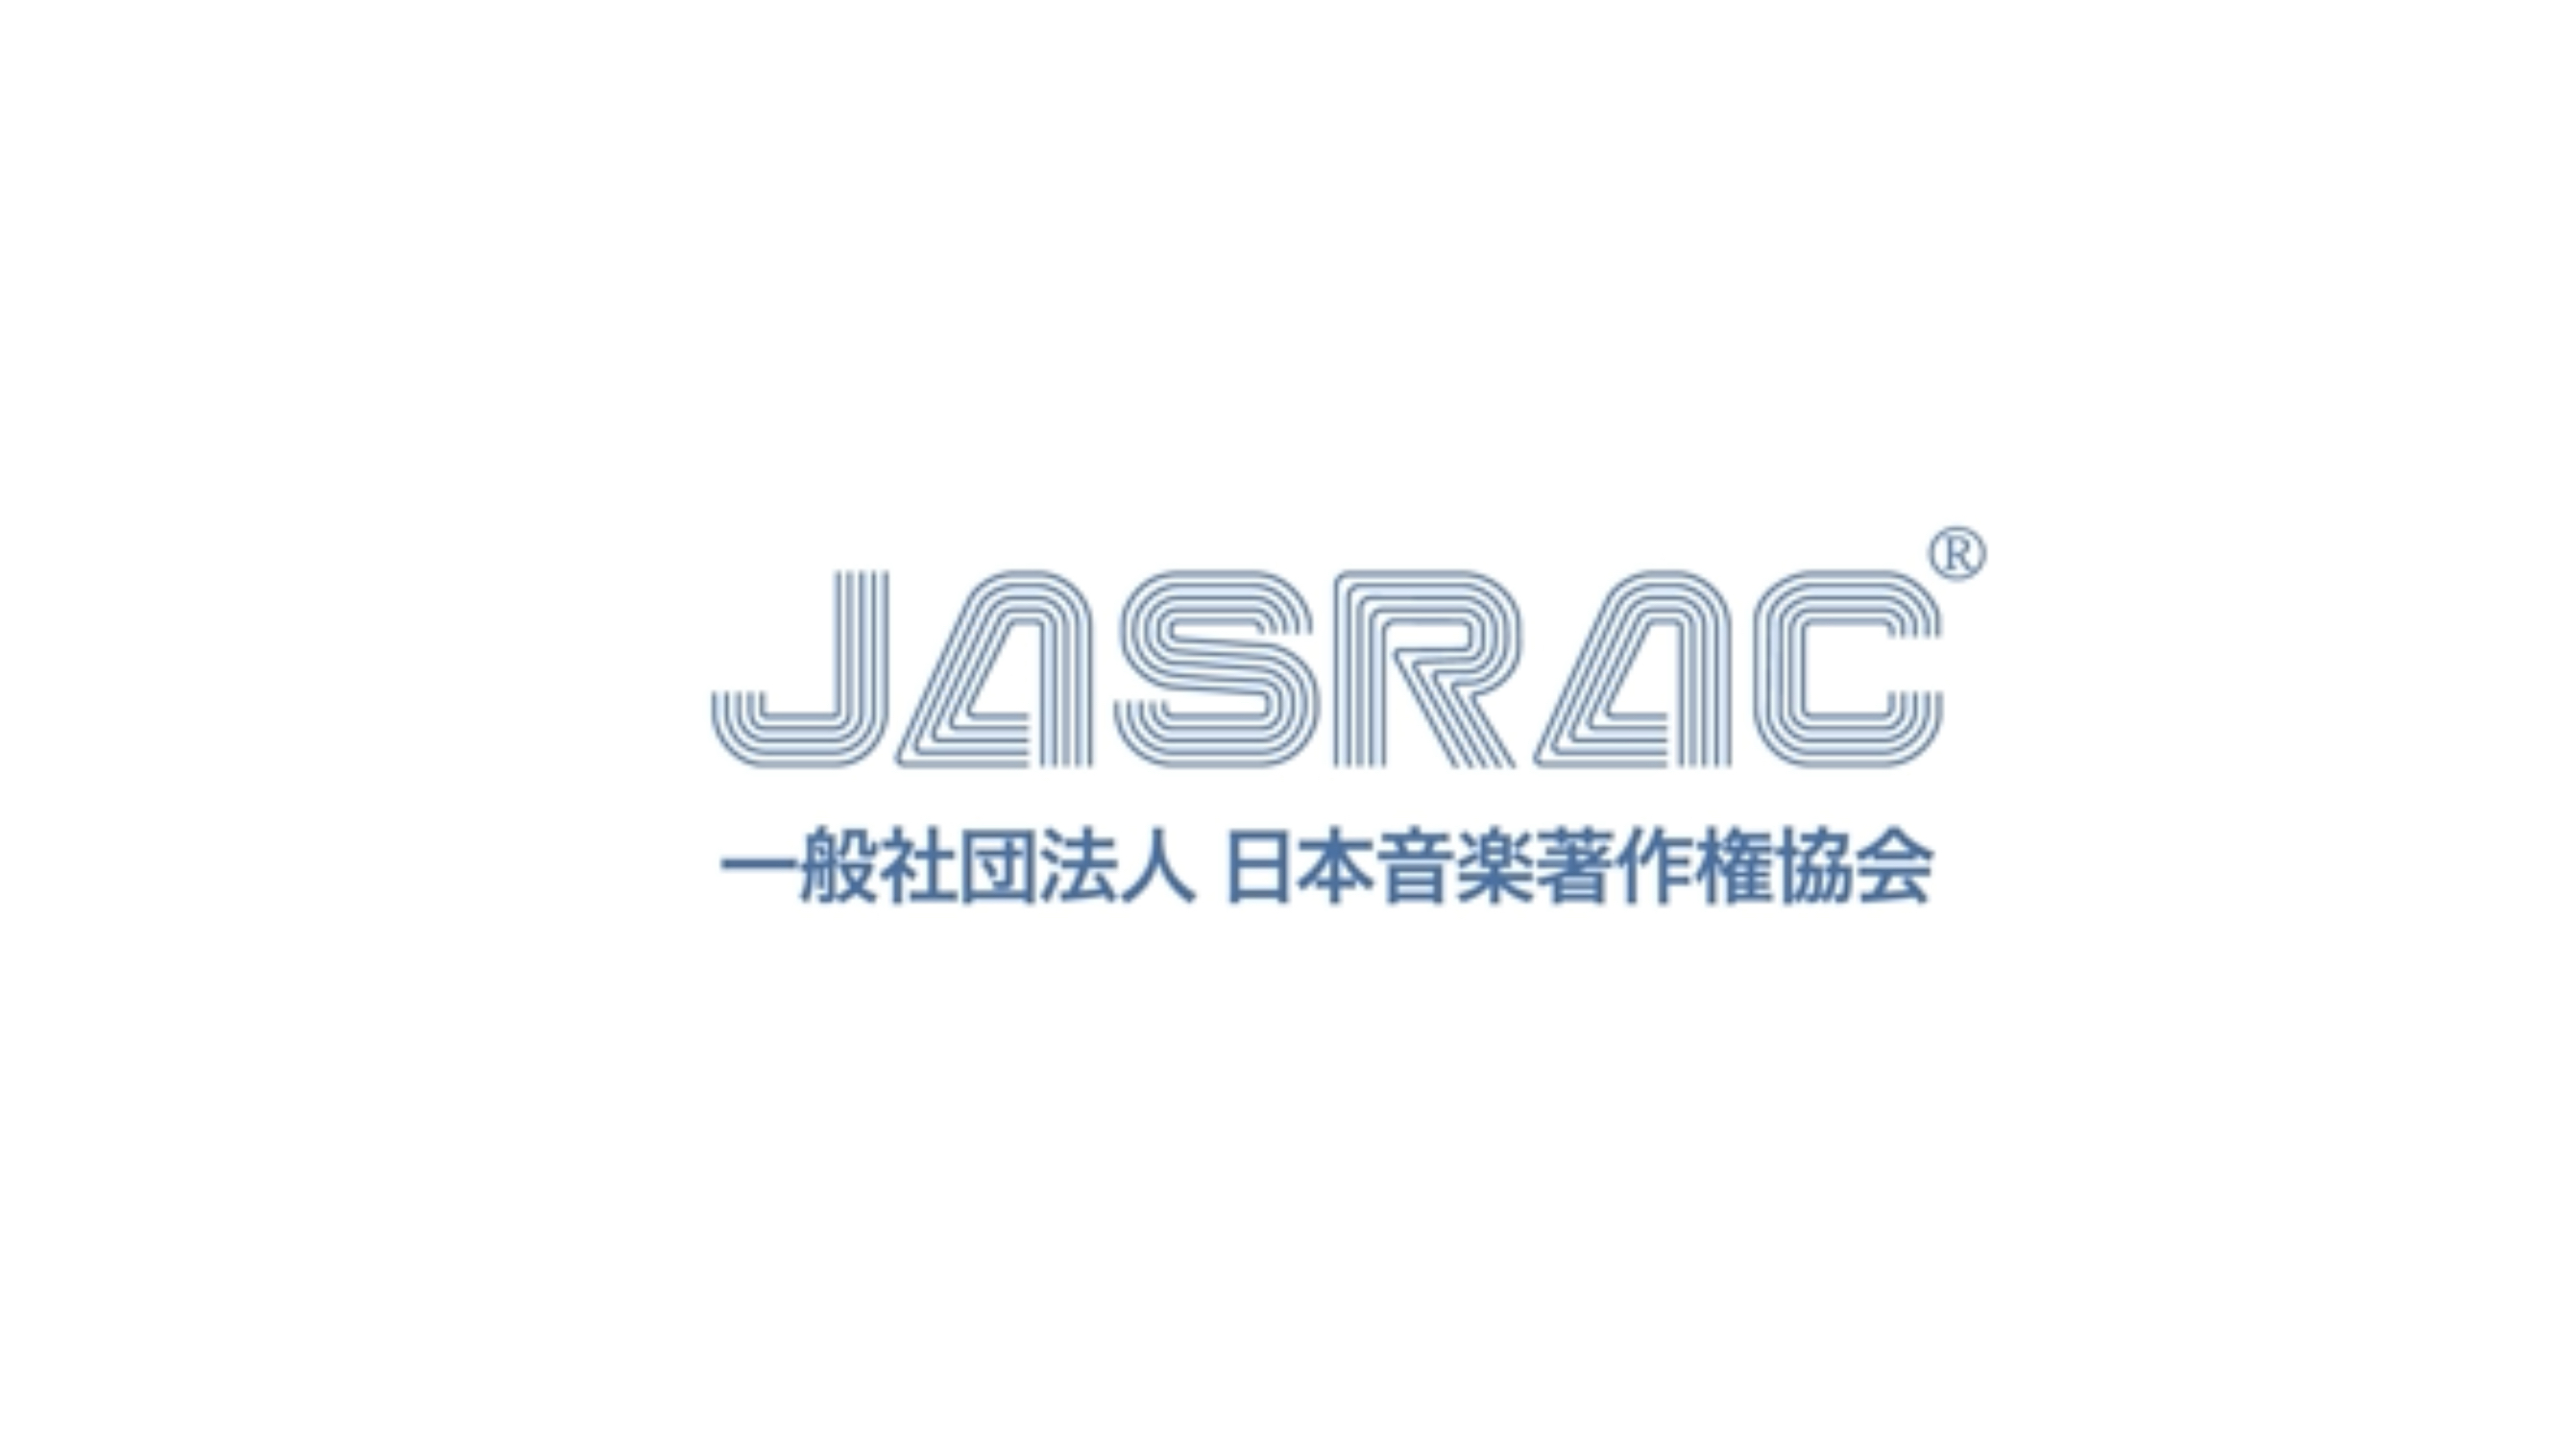 JASRACなど音楽9団体、「AIに関する音楽団体協議会」を設置─検討や提言で生成AIの調和を目指す